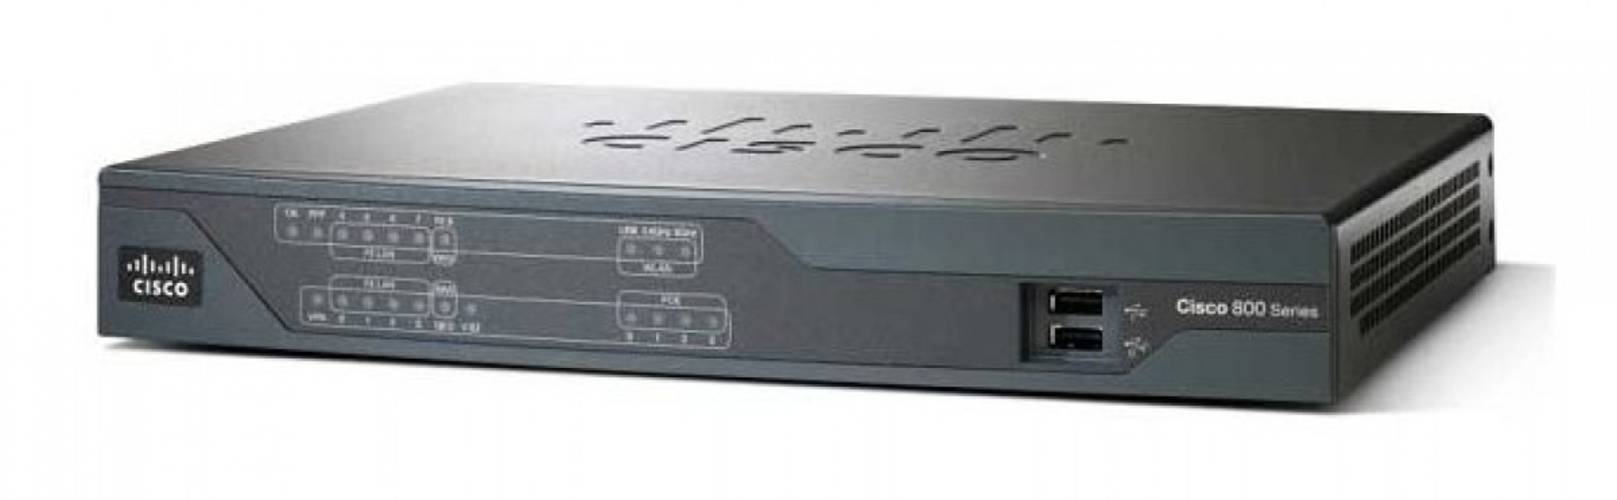 Cisco Router 892f 2 ge/sfp high